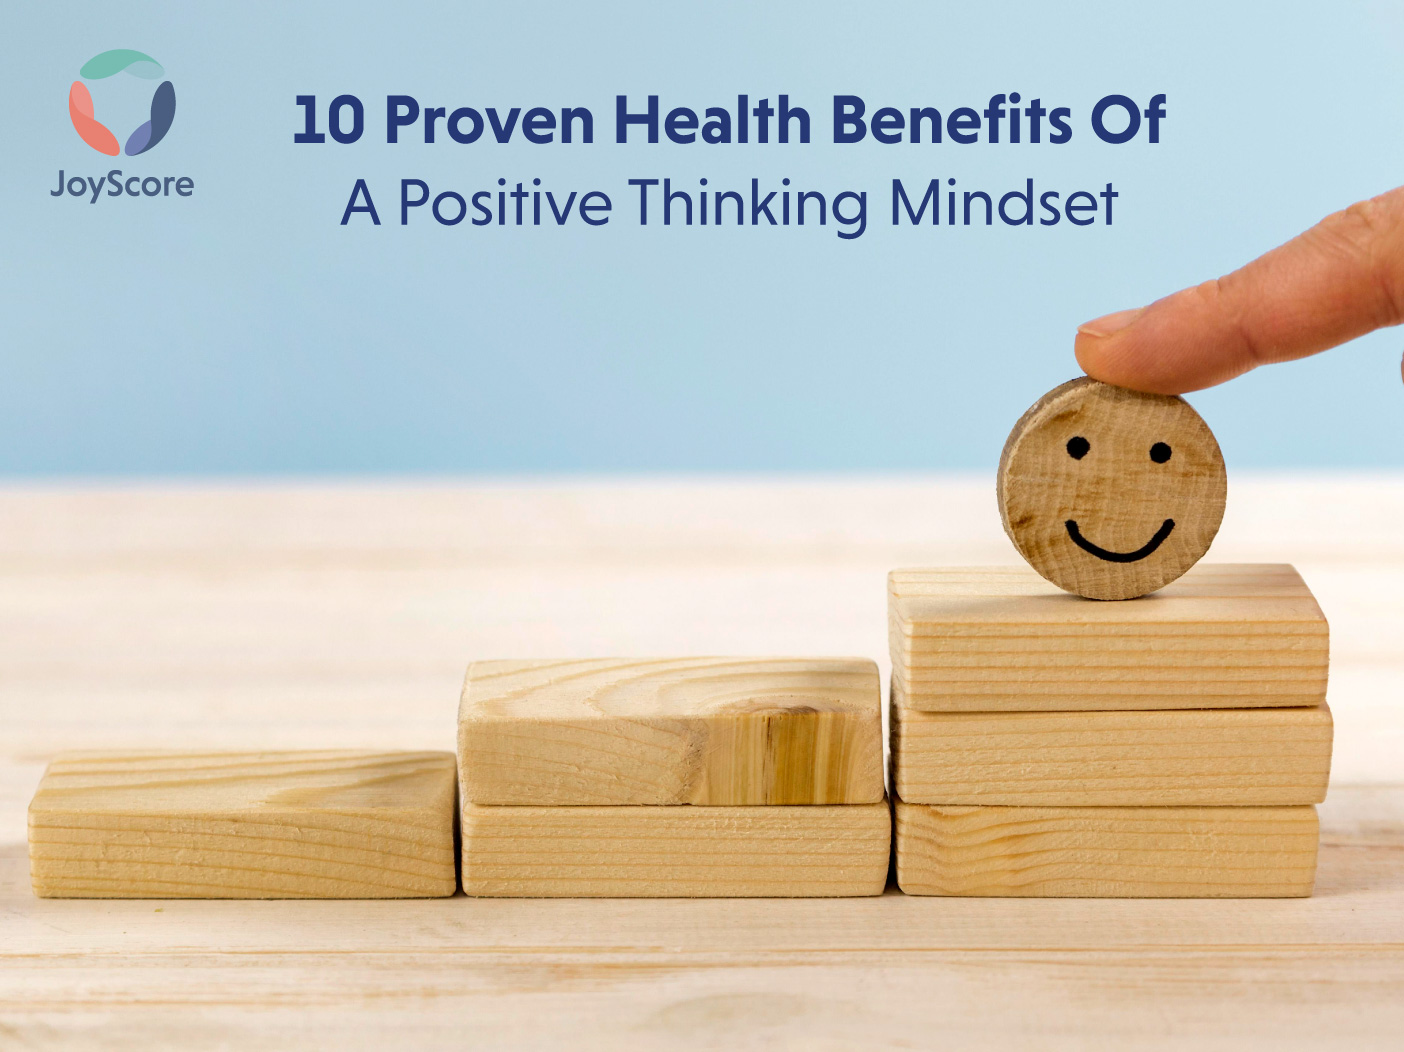 10 Proven Health Benefits of Positive Thinking Mindset - JoyScore: The Joy Of Self Care